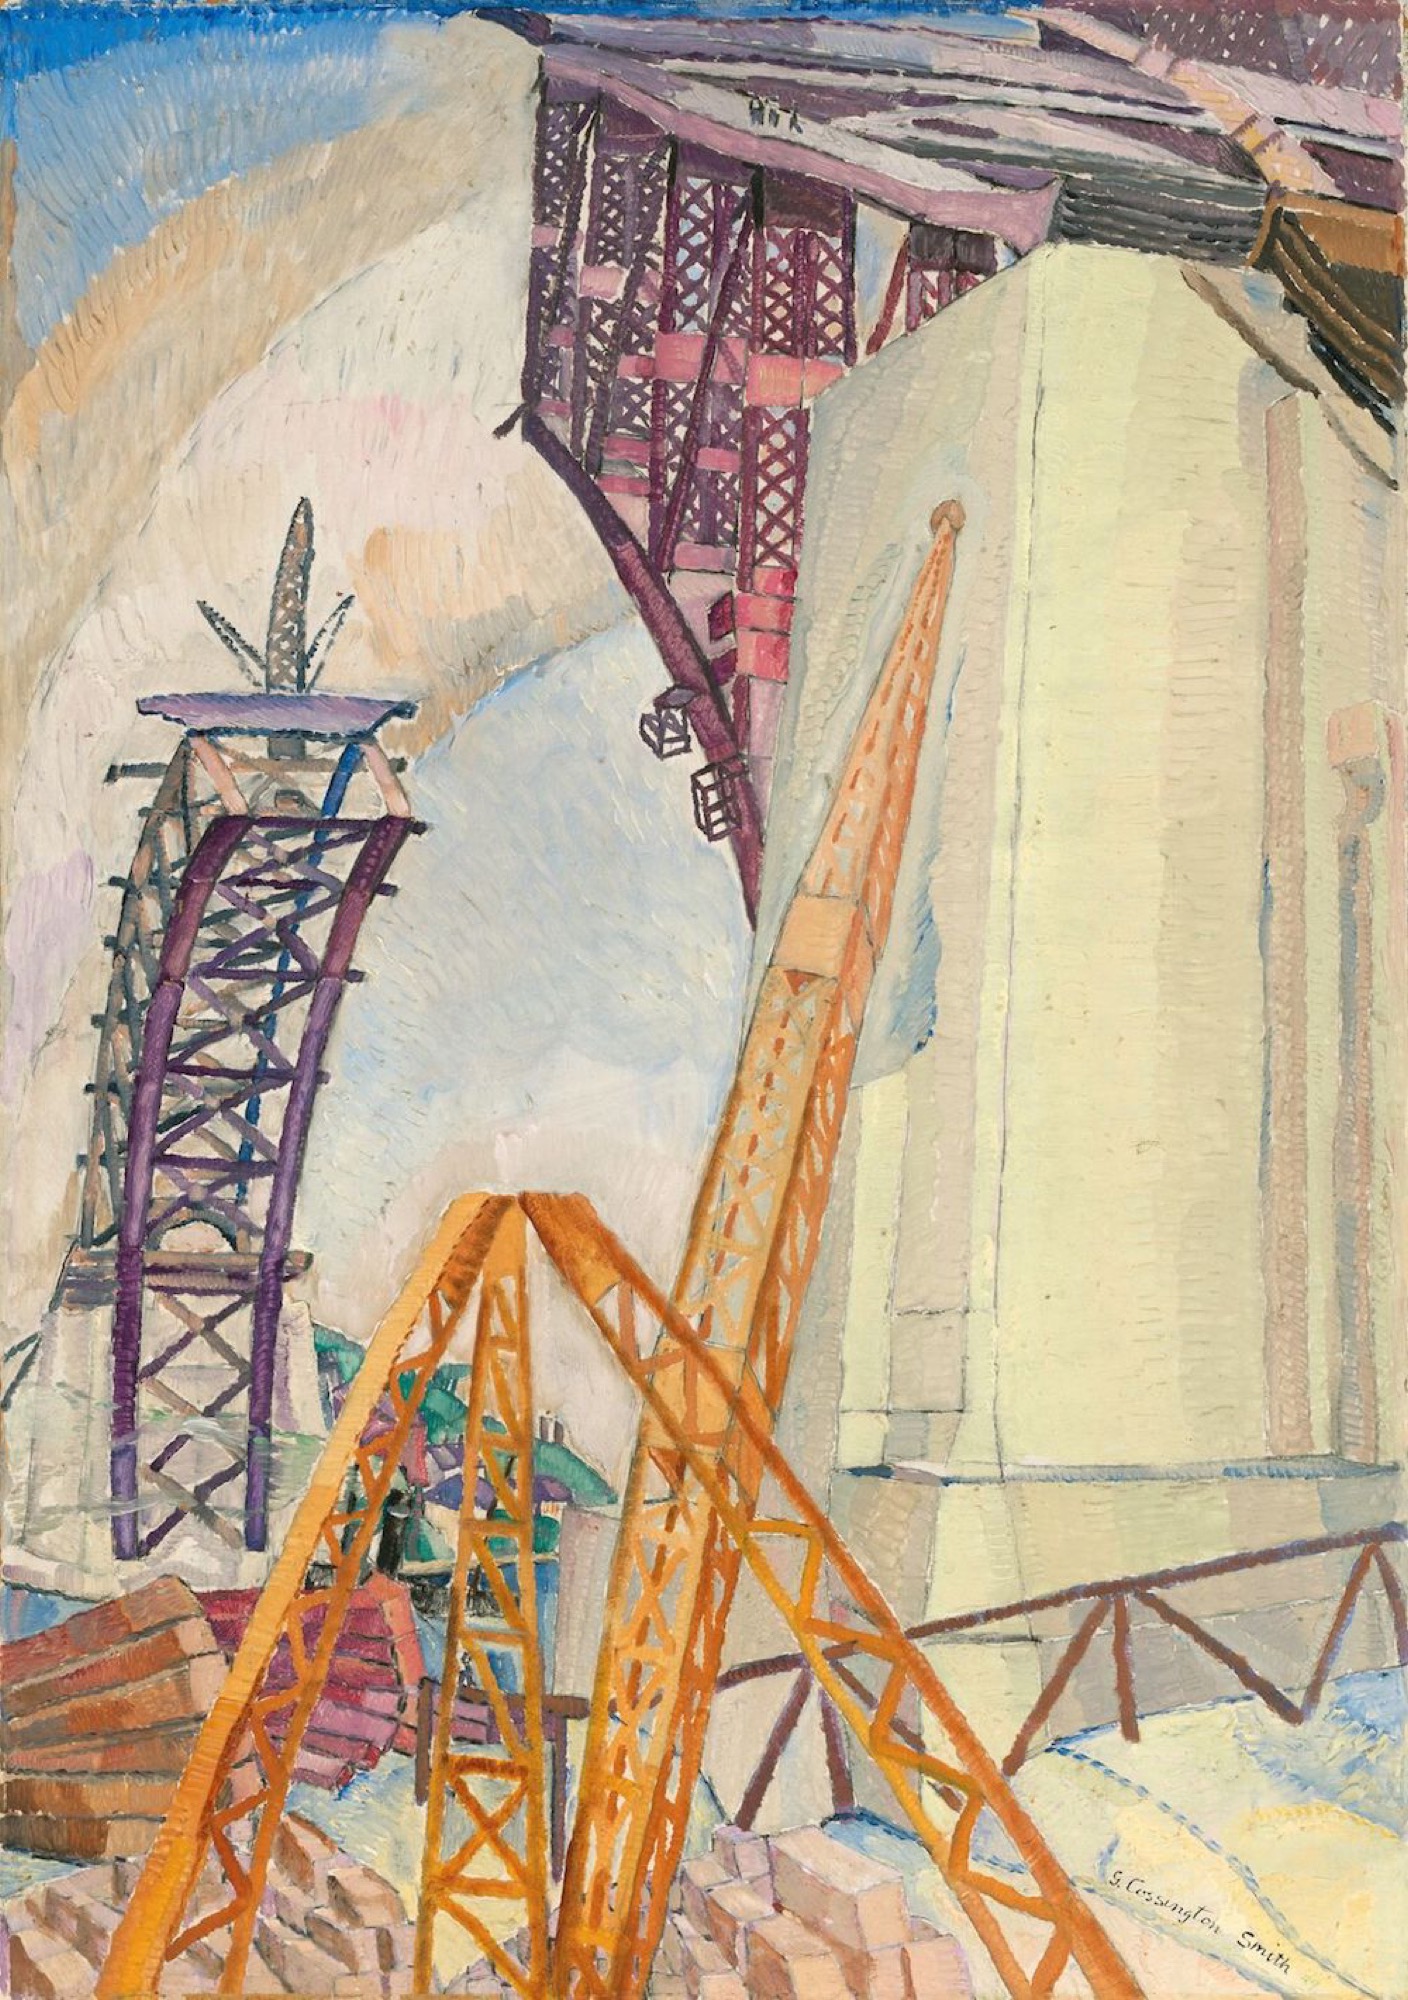 Grace Cossington Smith<br />
<em>The bridge in building</em>, 1929<br />
oil on pulpboard<br />
75 x 53 cm<br />
National Gallery of Australia<br />
Gift of Ellen Waugh 2005<br />
© Estate of Grace Cossington Smith